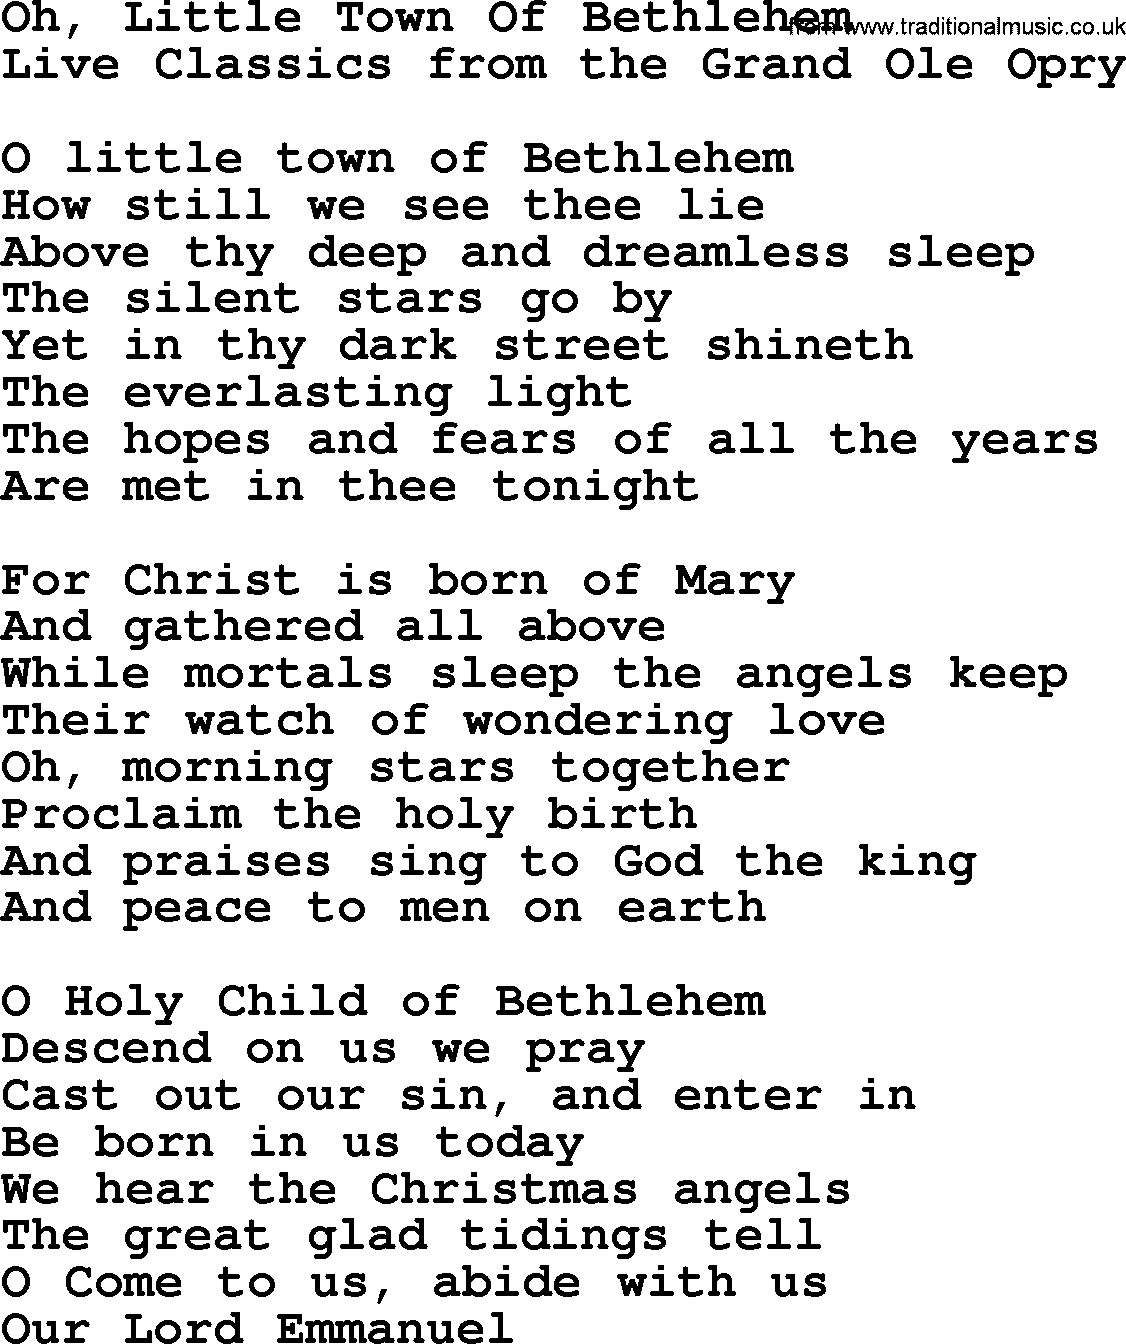 Marty Robbins song: Oh Little Town Of Bethlehem, lyrics